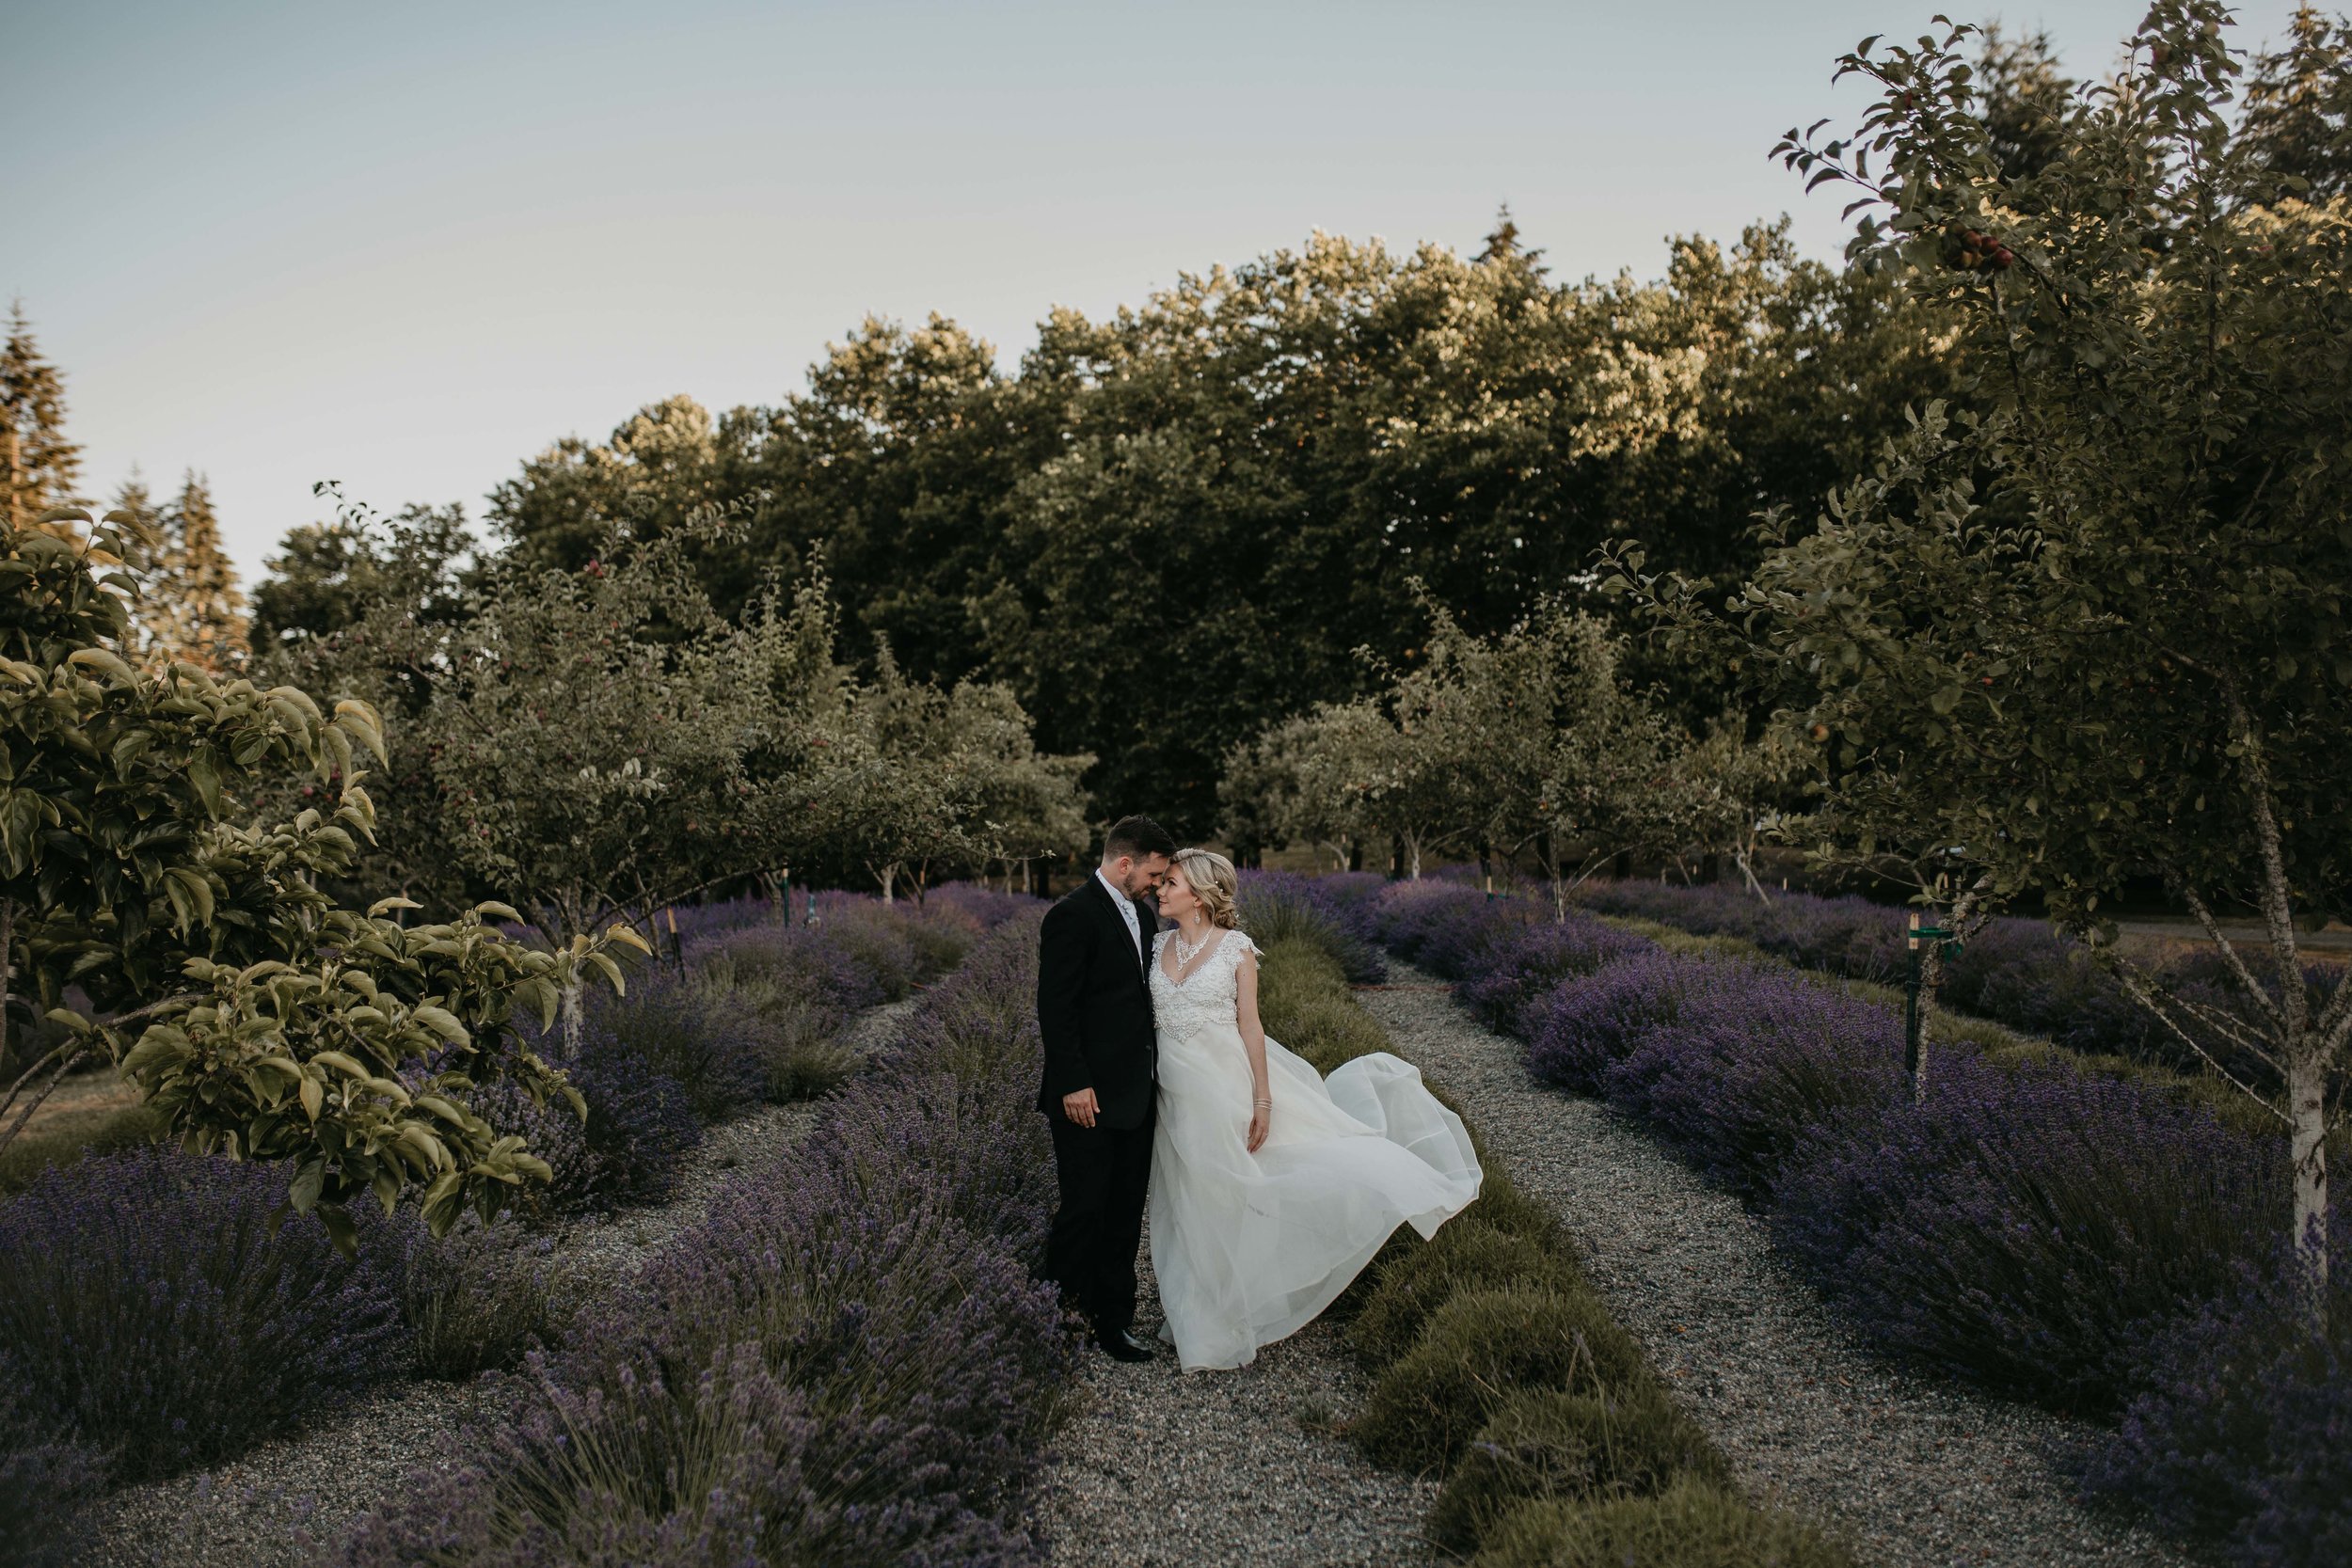 nicole-daacke-photography-kingston-house-bainbride-washington-wedding-photography-summer-wedding-lavendar-field-pacific-northwest-wedding-glam-forest-elopement-photographer-81.jpg